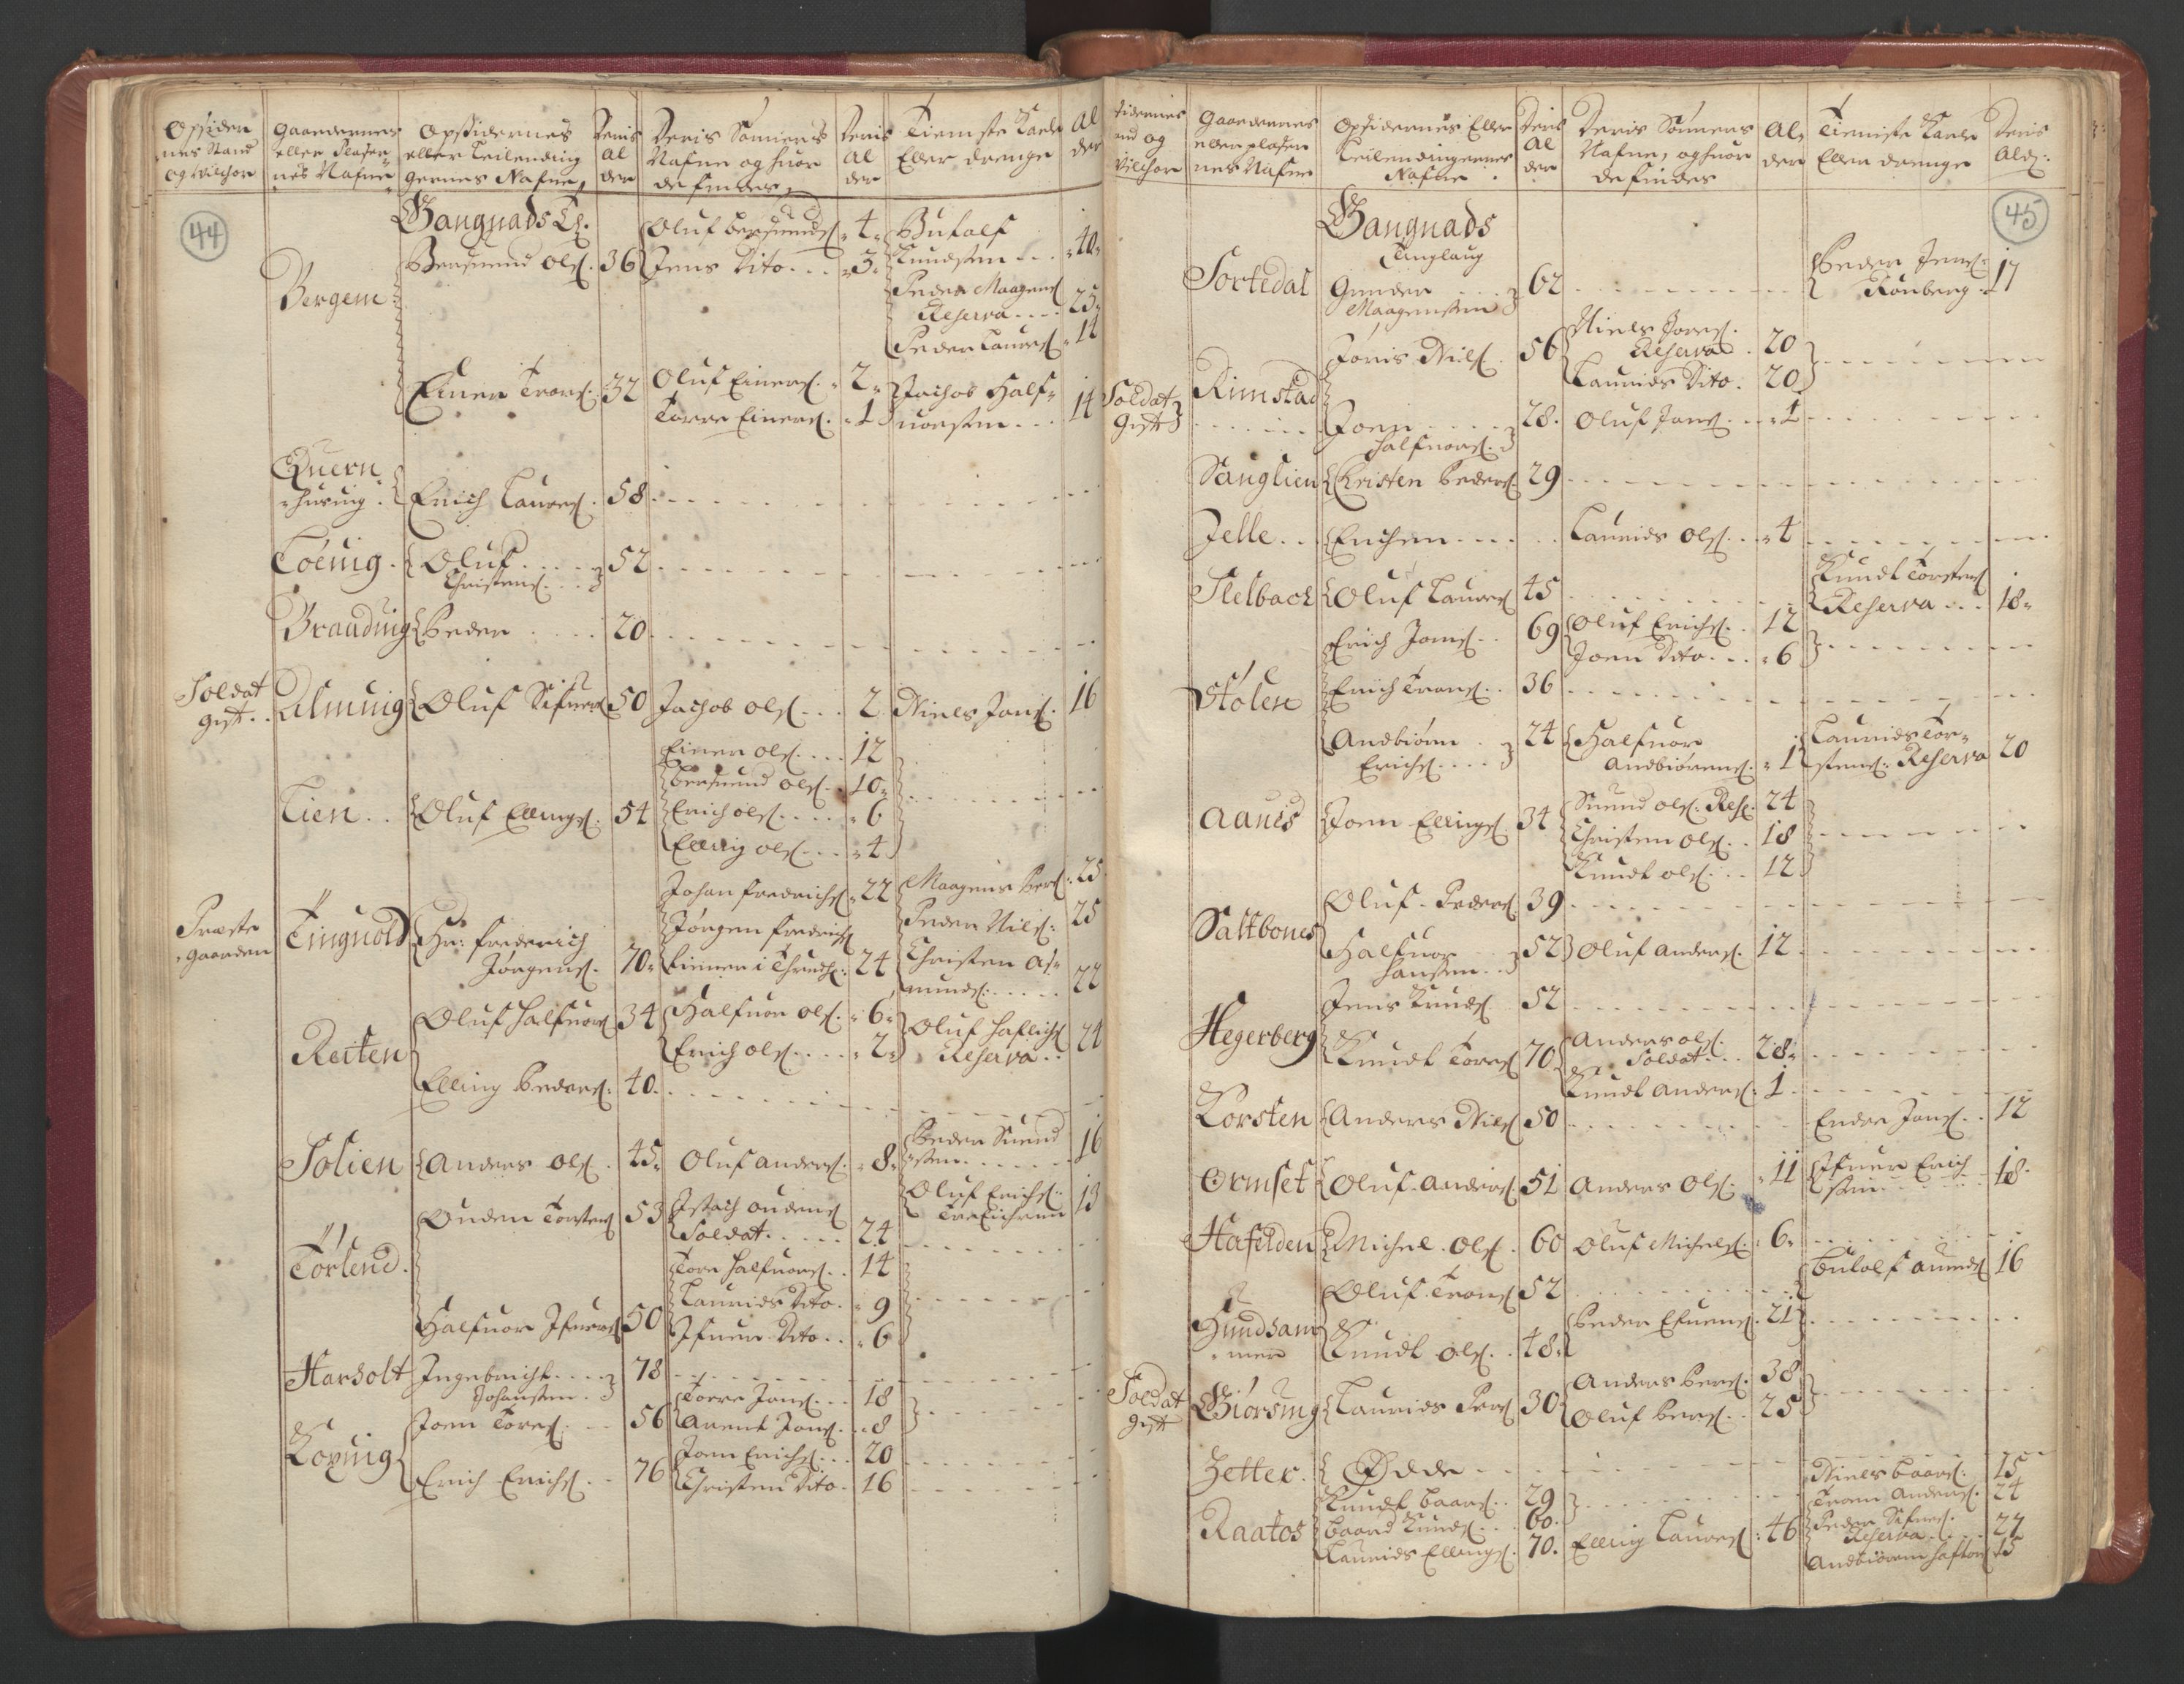 RA, Census (manntall) 1701, no. 11: Nordmøre fogderi and Romsdal fogderi, 1701, p. 44-45